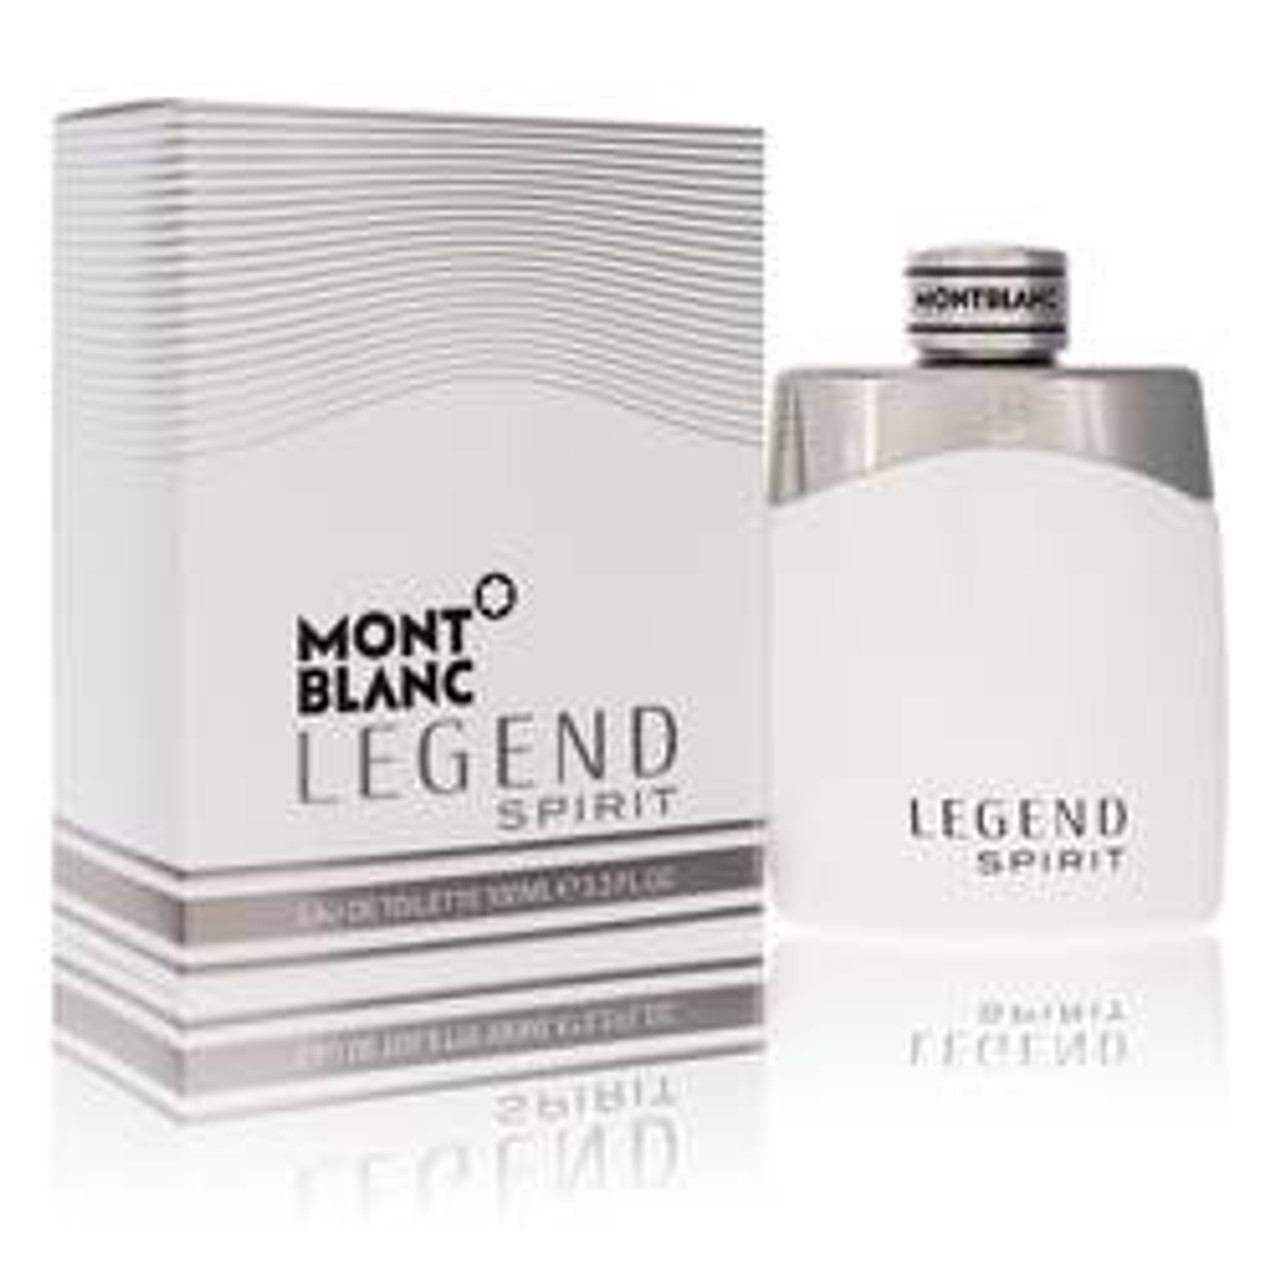 Montblanc Legend Spirit Cologne By Mont Blanc Eau De Toilette Spray 3.3 oz for Men - [From 116.00 - Choose pk Qty ] - *Ships from Miami